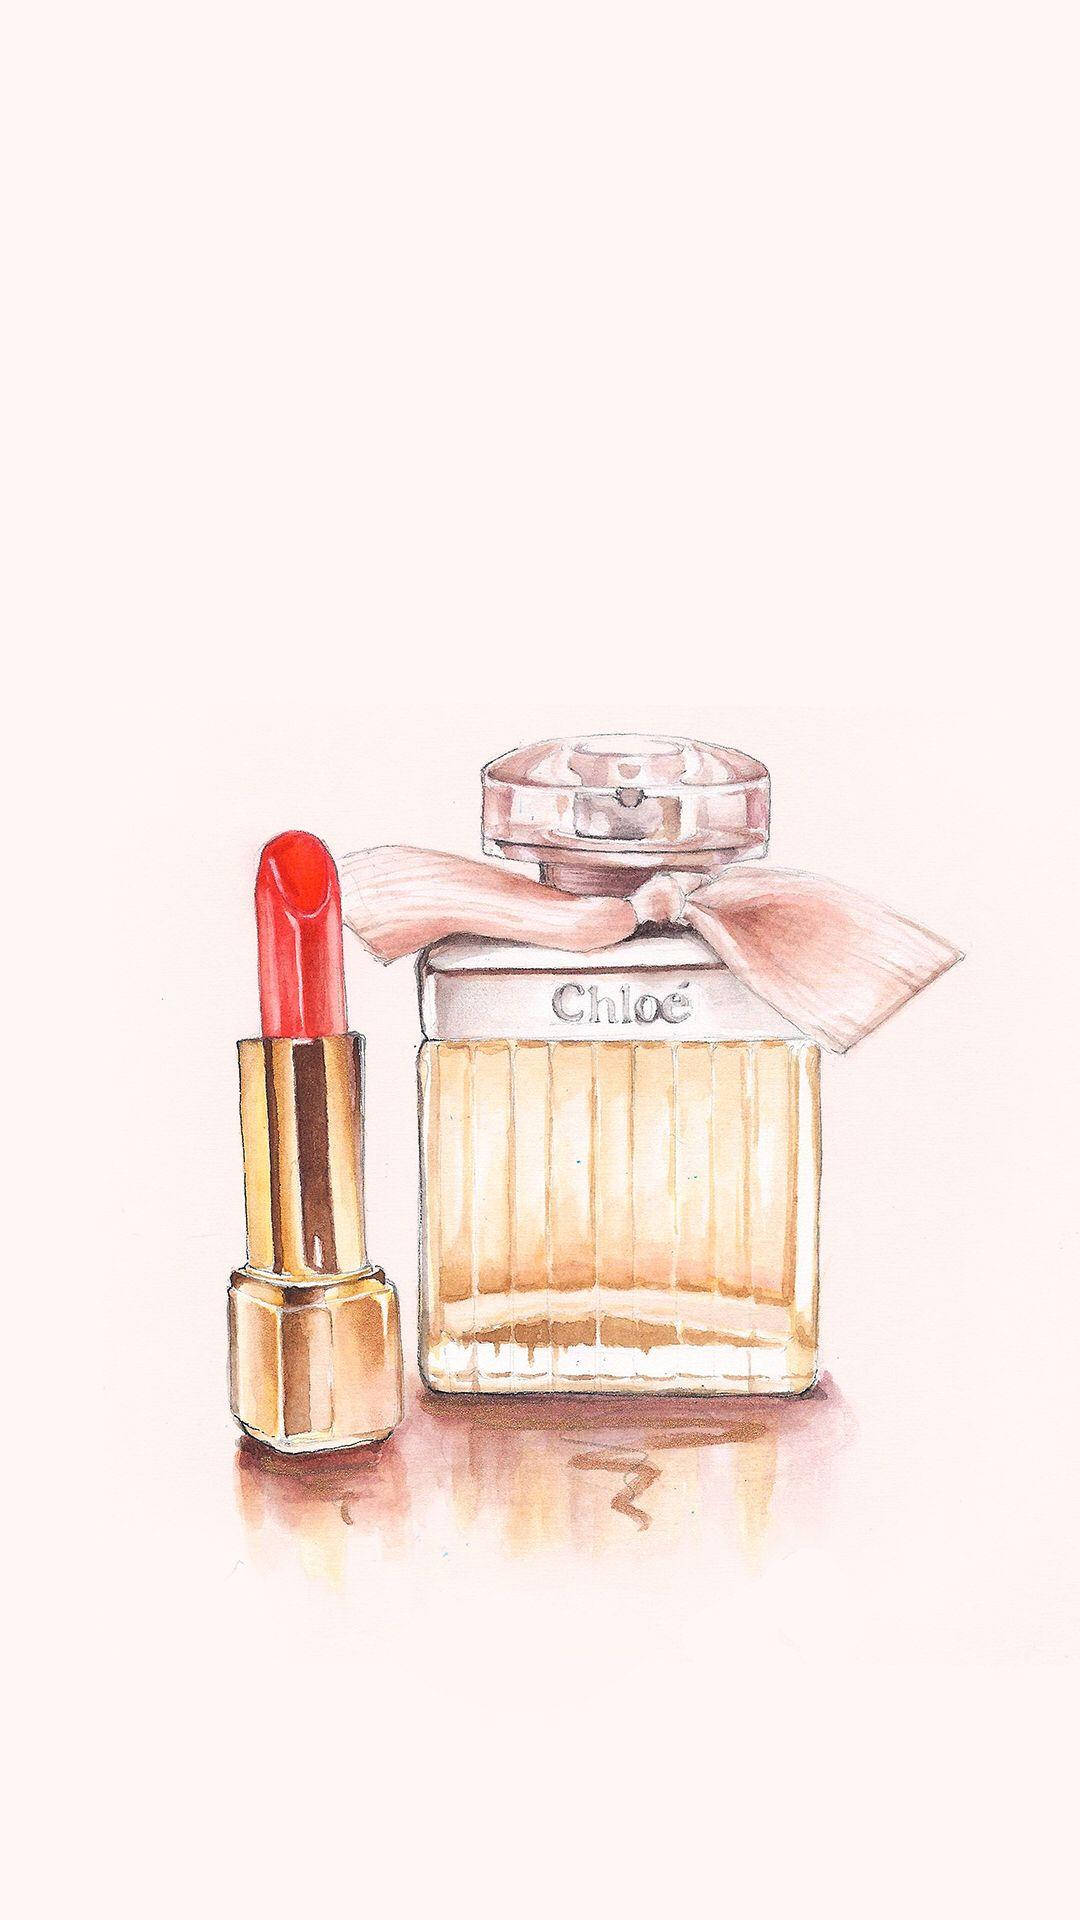 Chloé Perfume And Lipstick Wallpaper